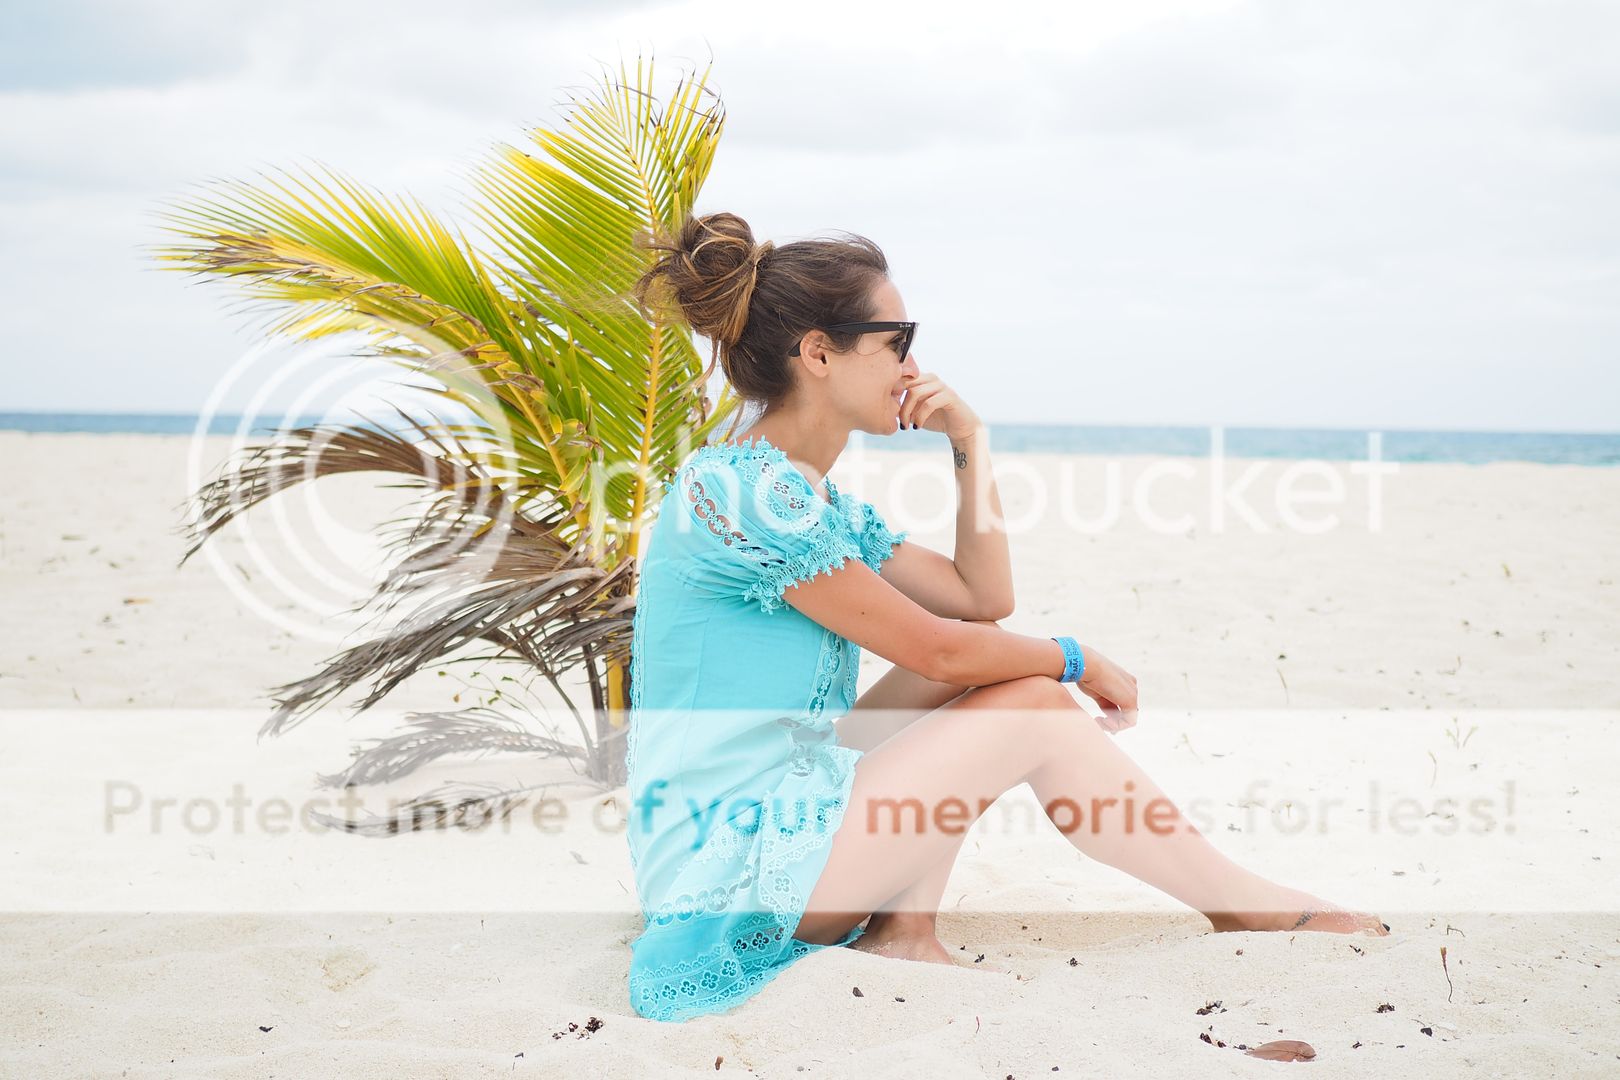  photo how to wear summer dress beach caribbean mexico.jpg